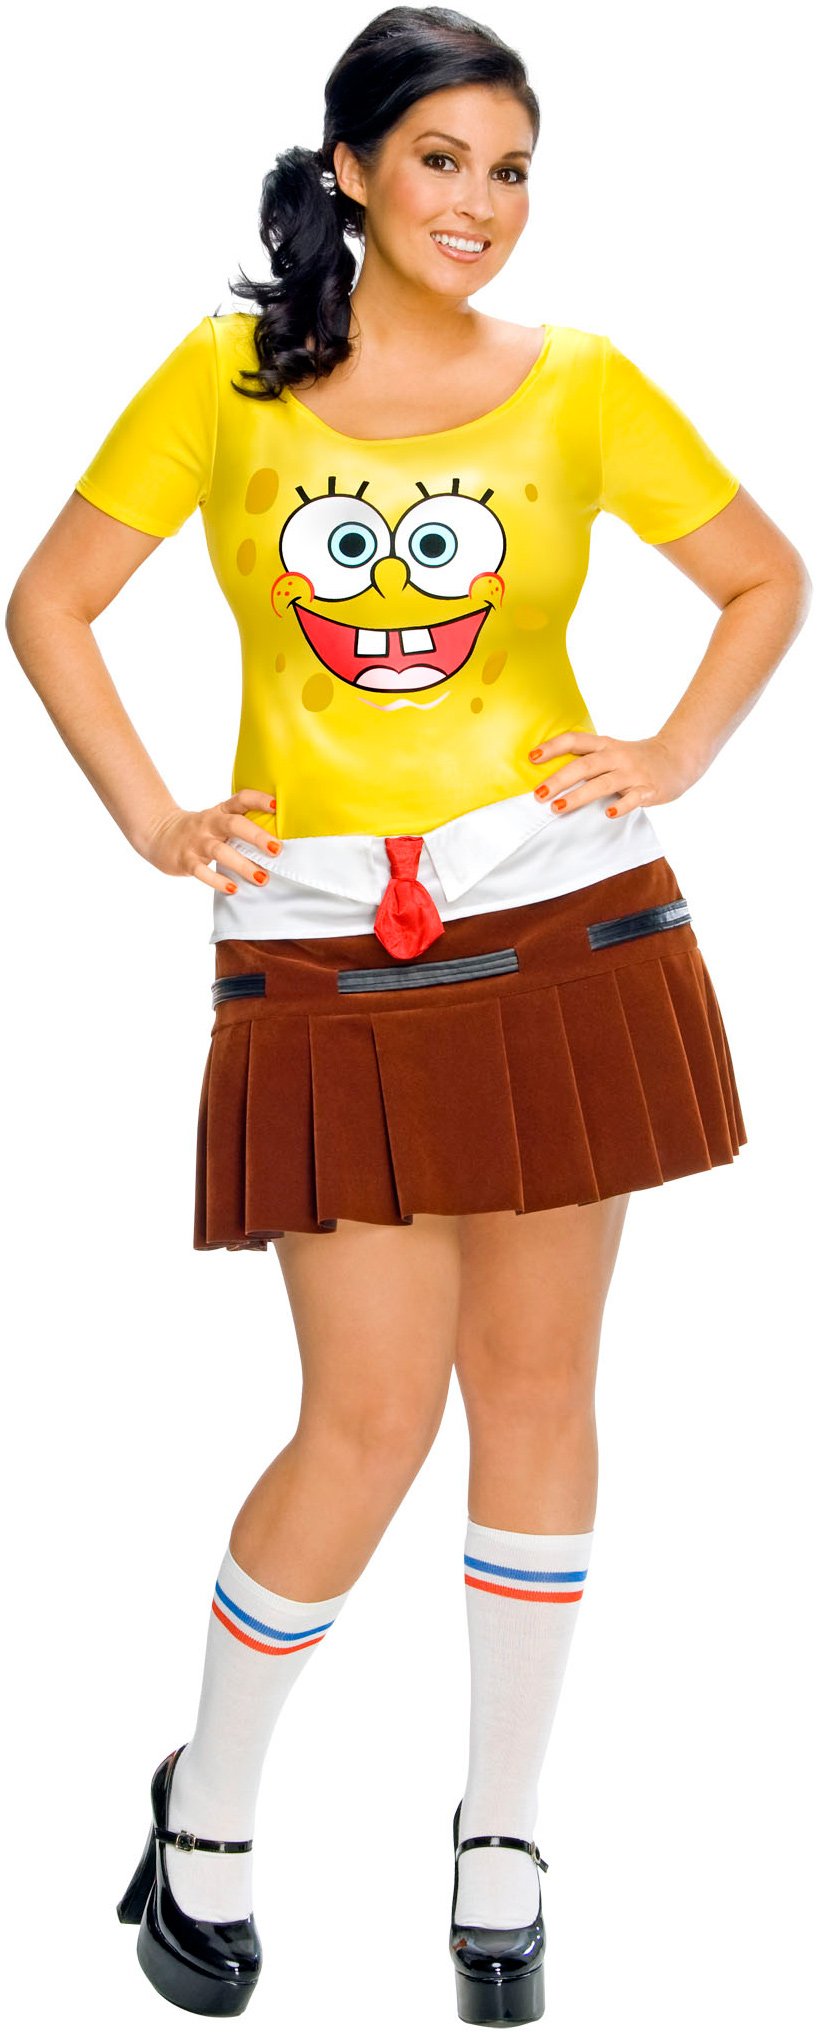 Spongebob Squarepants - Spongebabe Adult Plus Costume